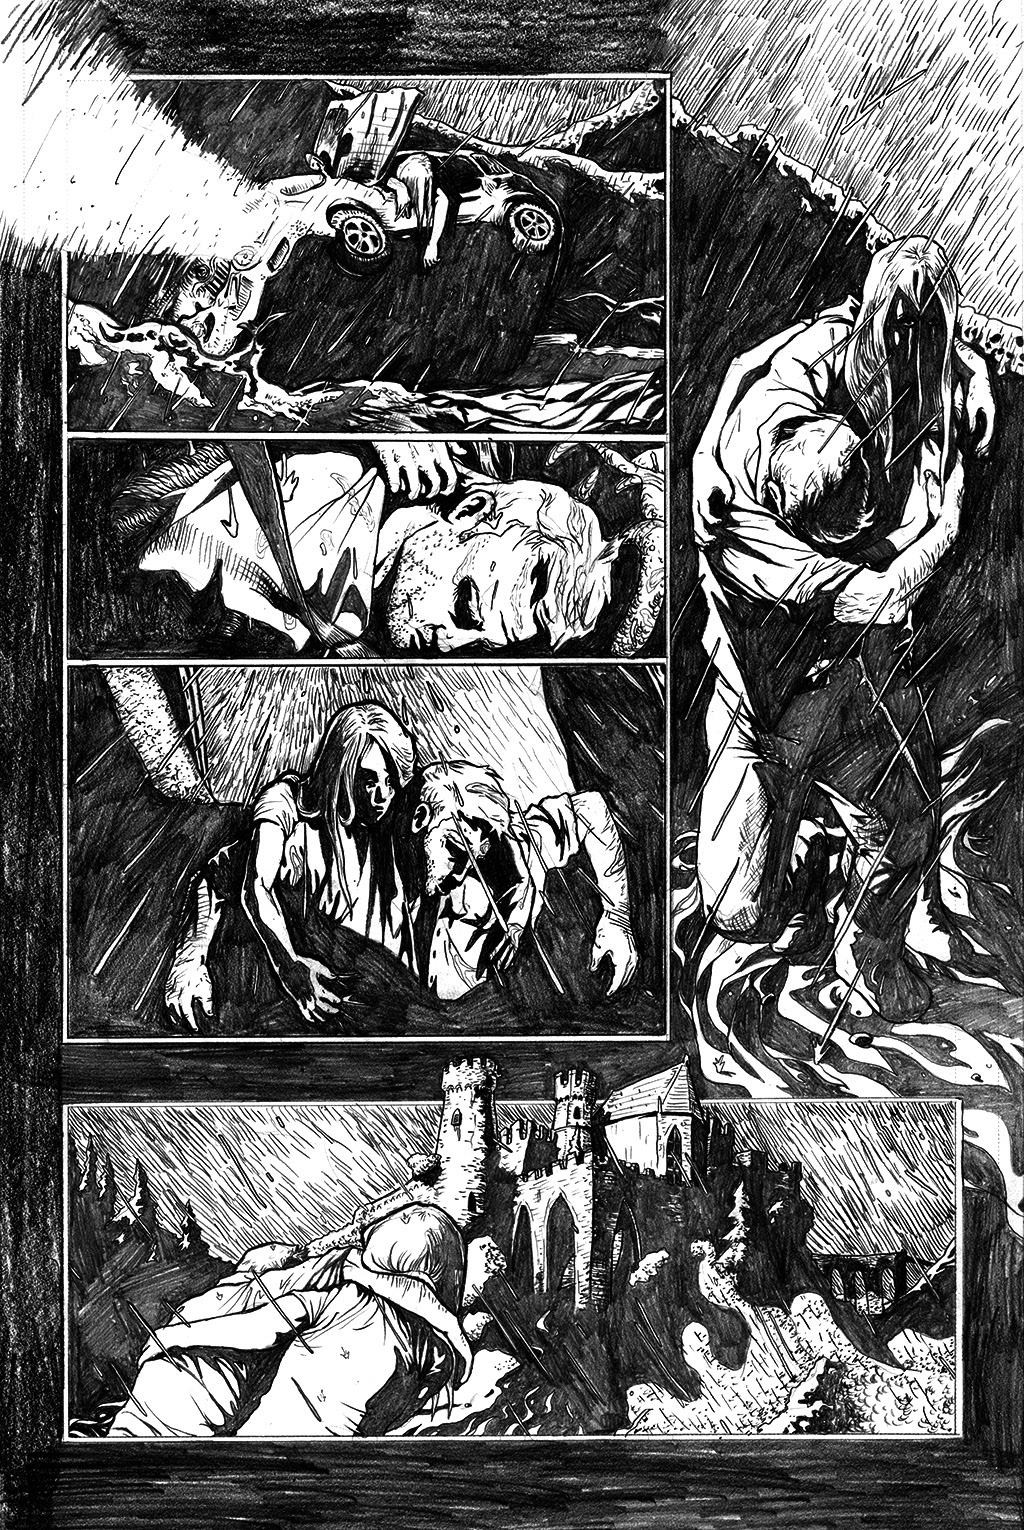 batman  blond girl dark castle Halloween Bruce Wayne crime alley Mugger murder budapest Graphic Novel Comic Book rainy night gothic building diner swamp-thing